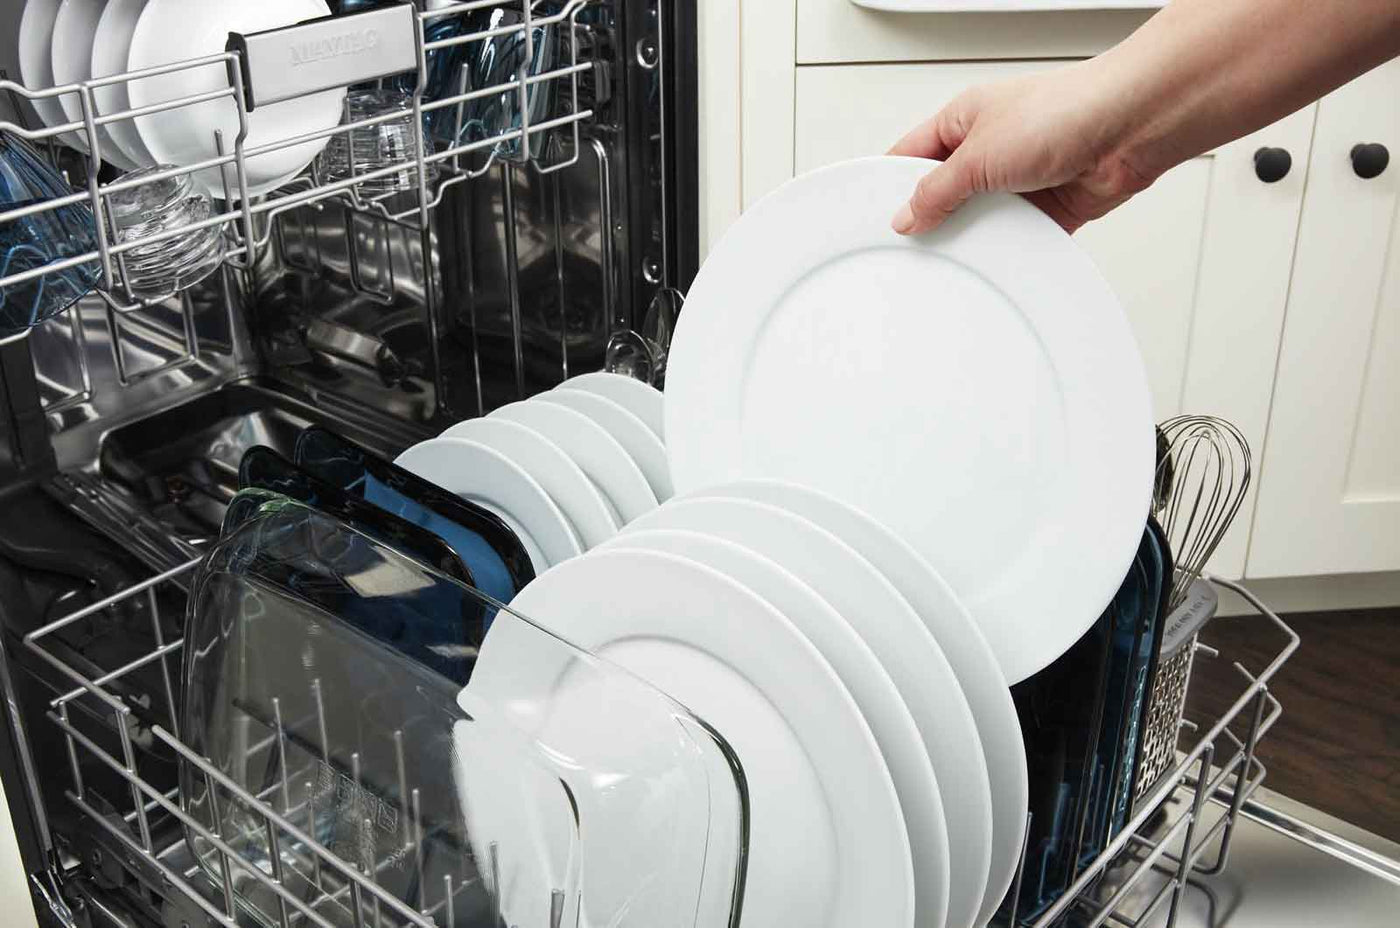 Maytag 24" White dishwasher with Dual Power filtration (50 dBA) - MDB4949SKW